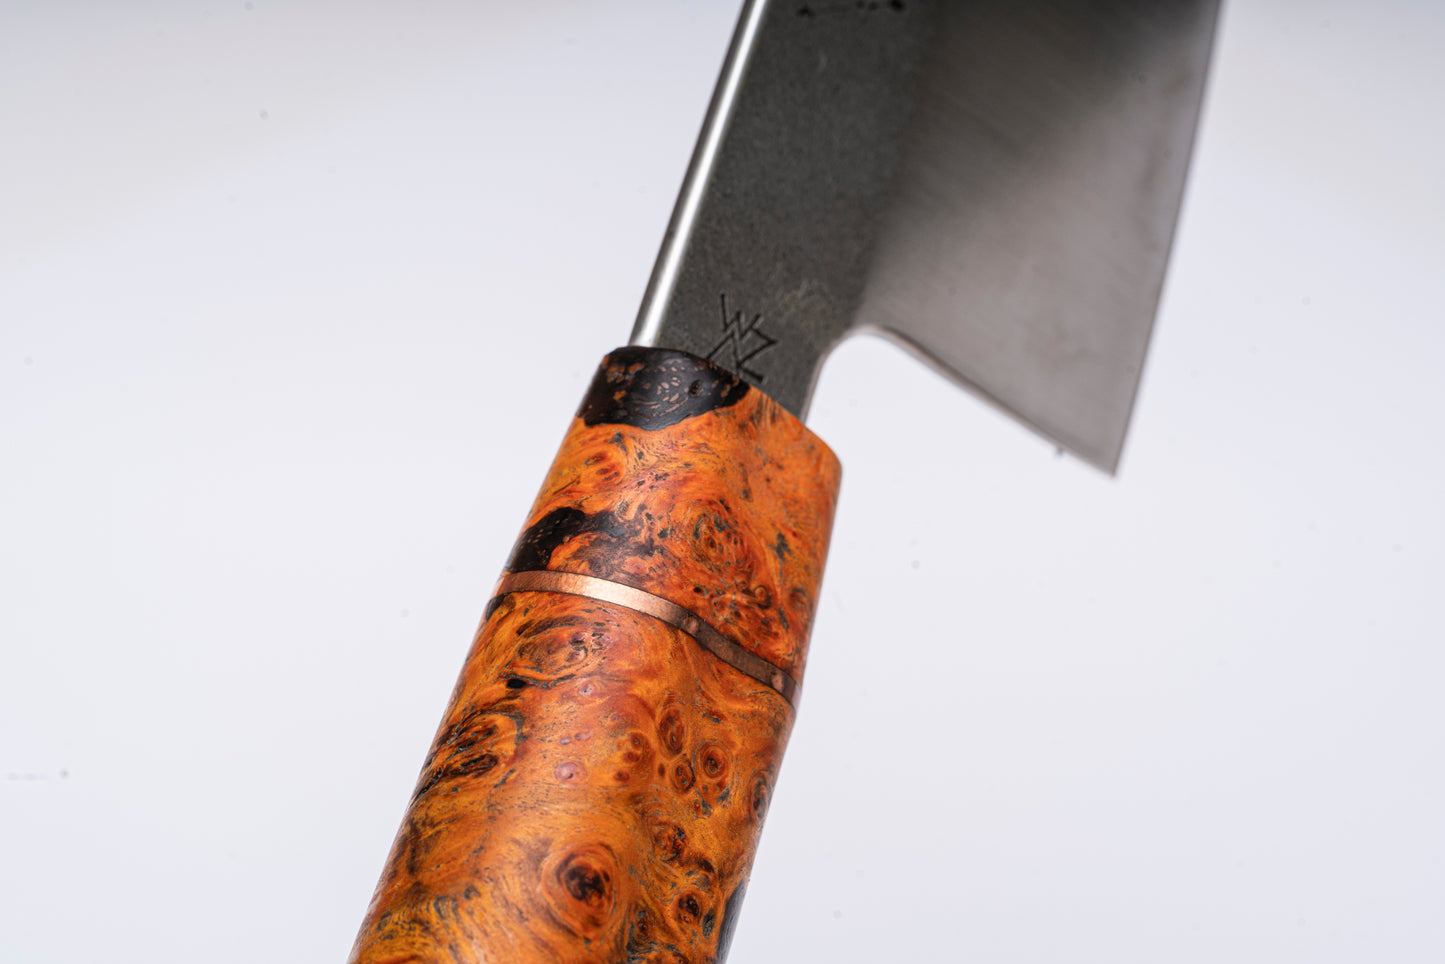 4" Mini Chef's Knife / Orange Stabilized Burl Handle